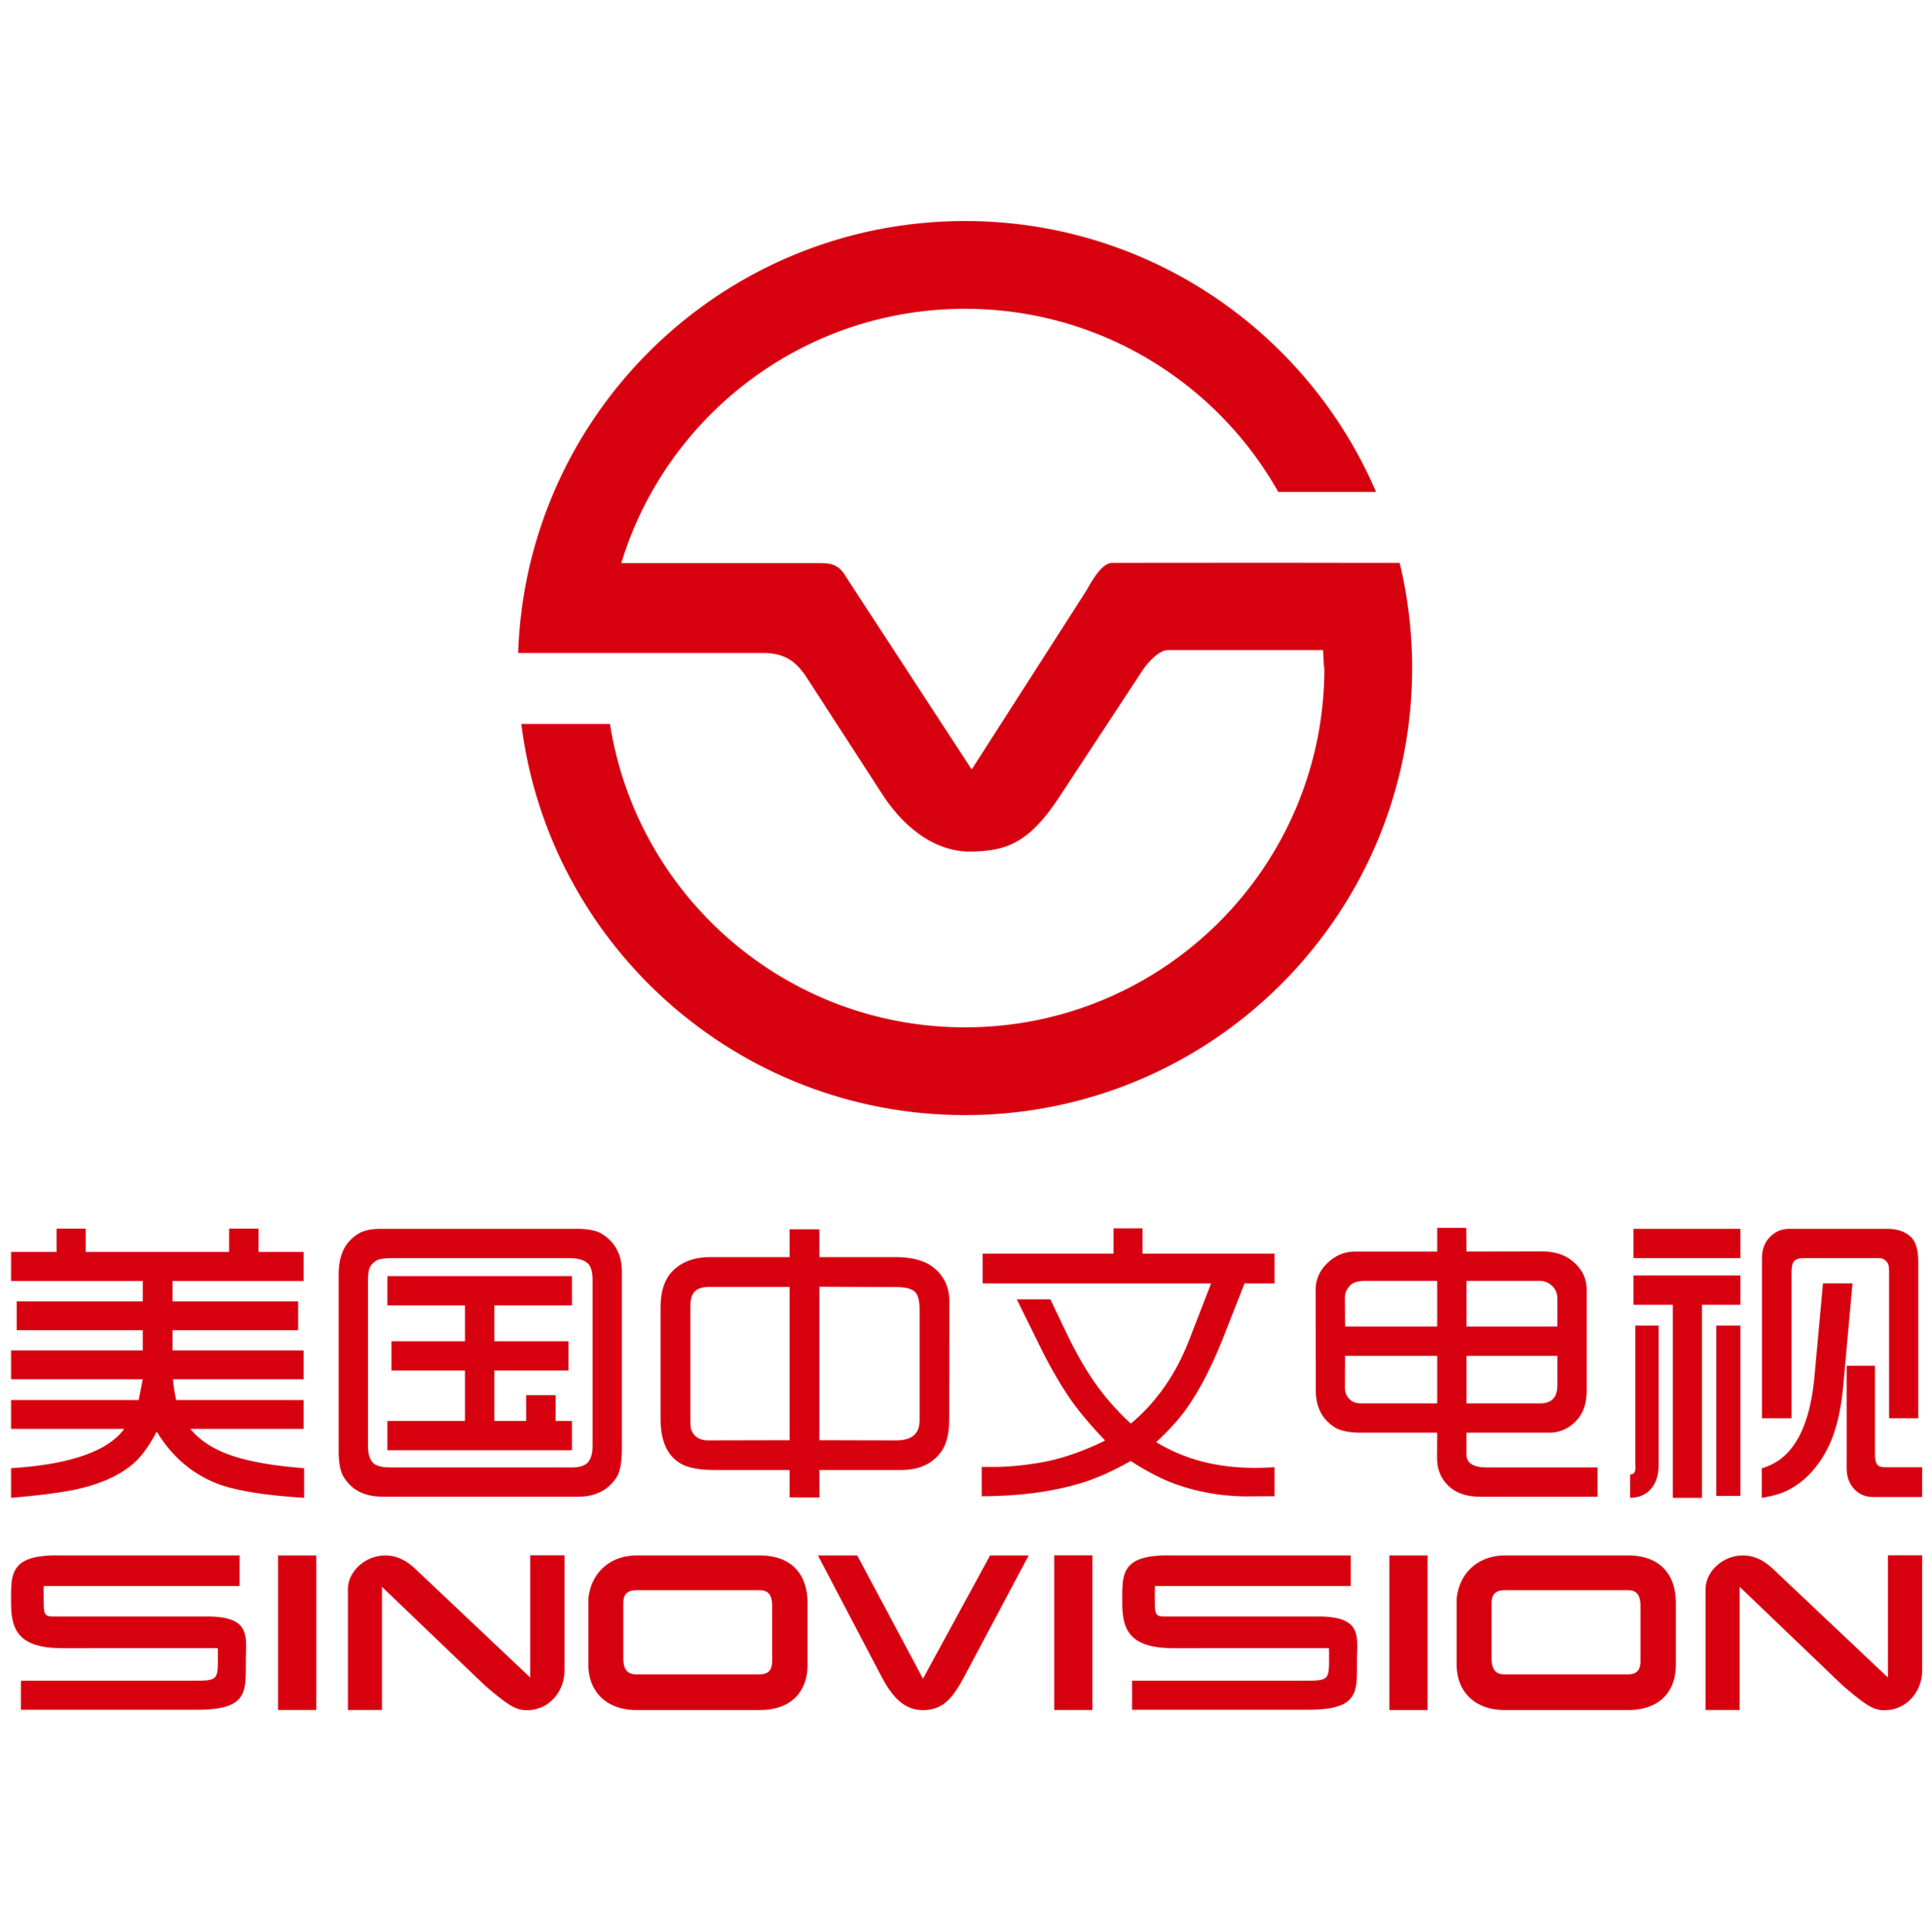 SV_logo1 copy.png